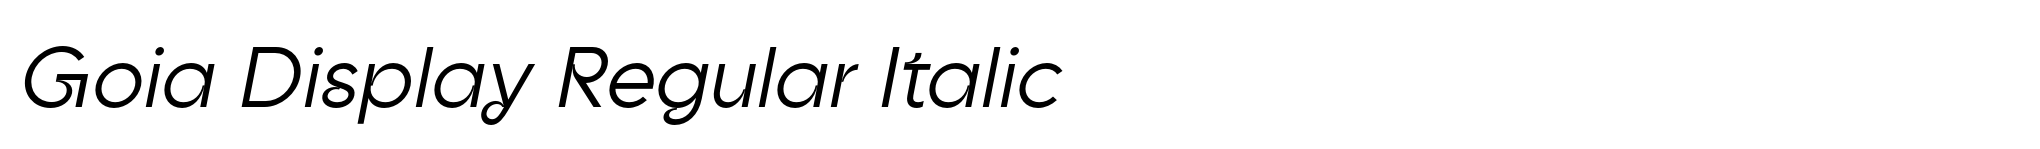 Goia Display Regular Italic image